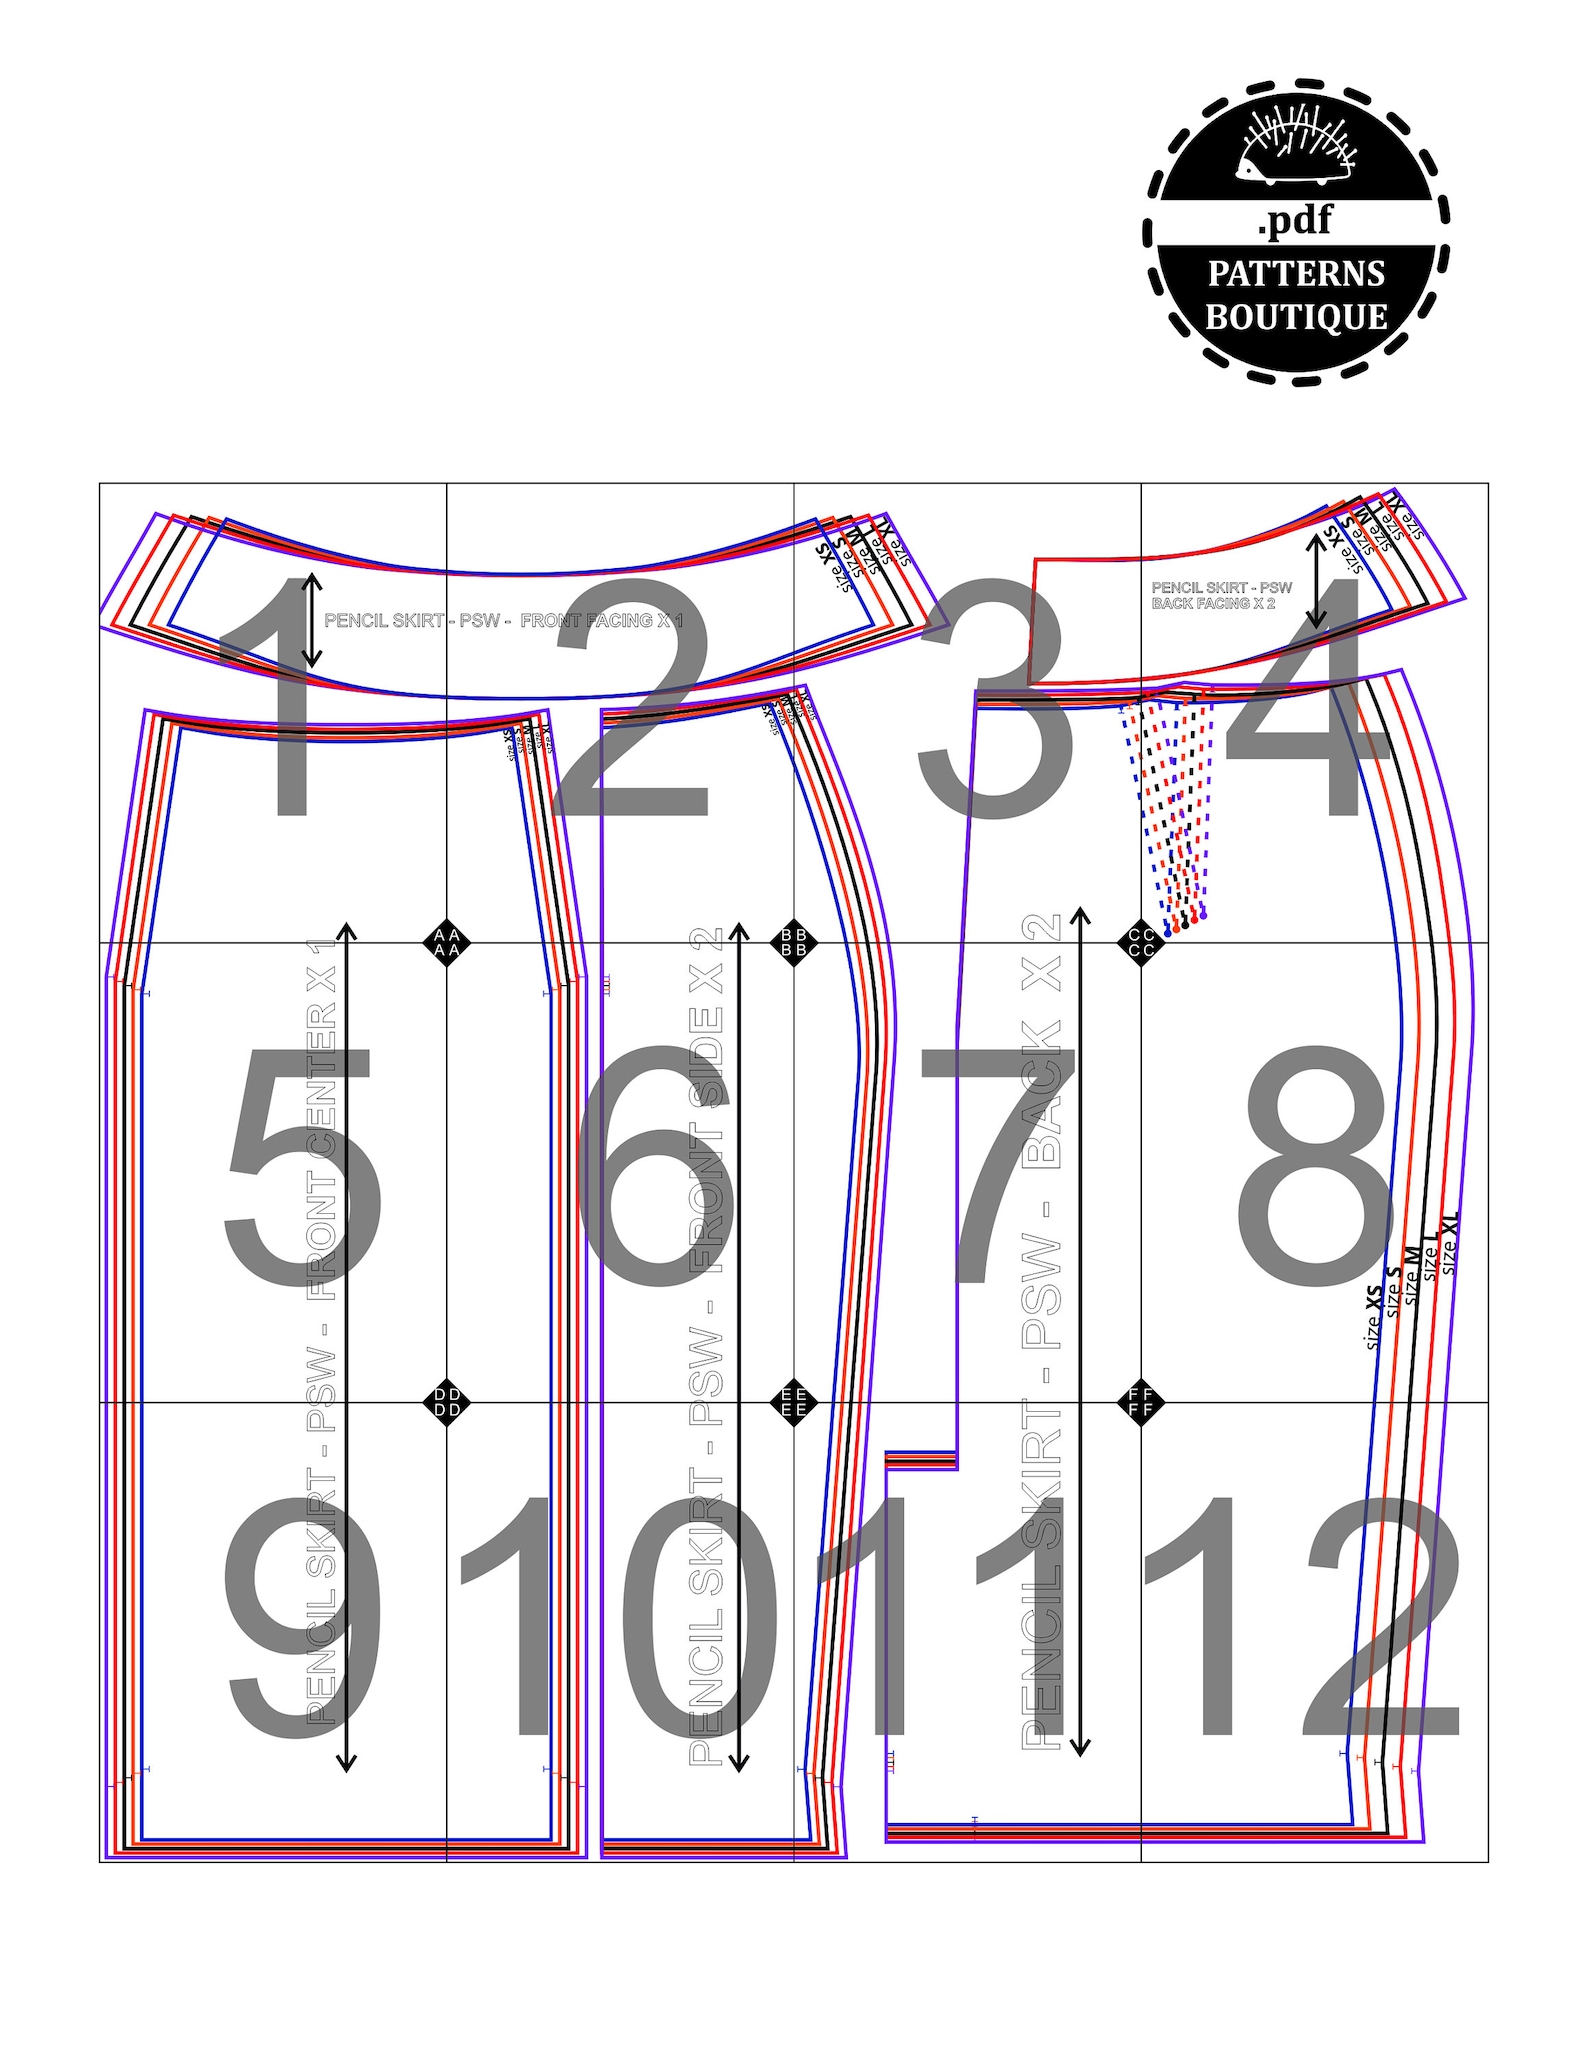 PENCIL SKIRT PDF Sewing Pattern / Basic pencil skirt pattern | Etsy